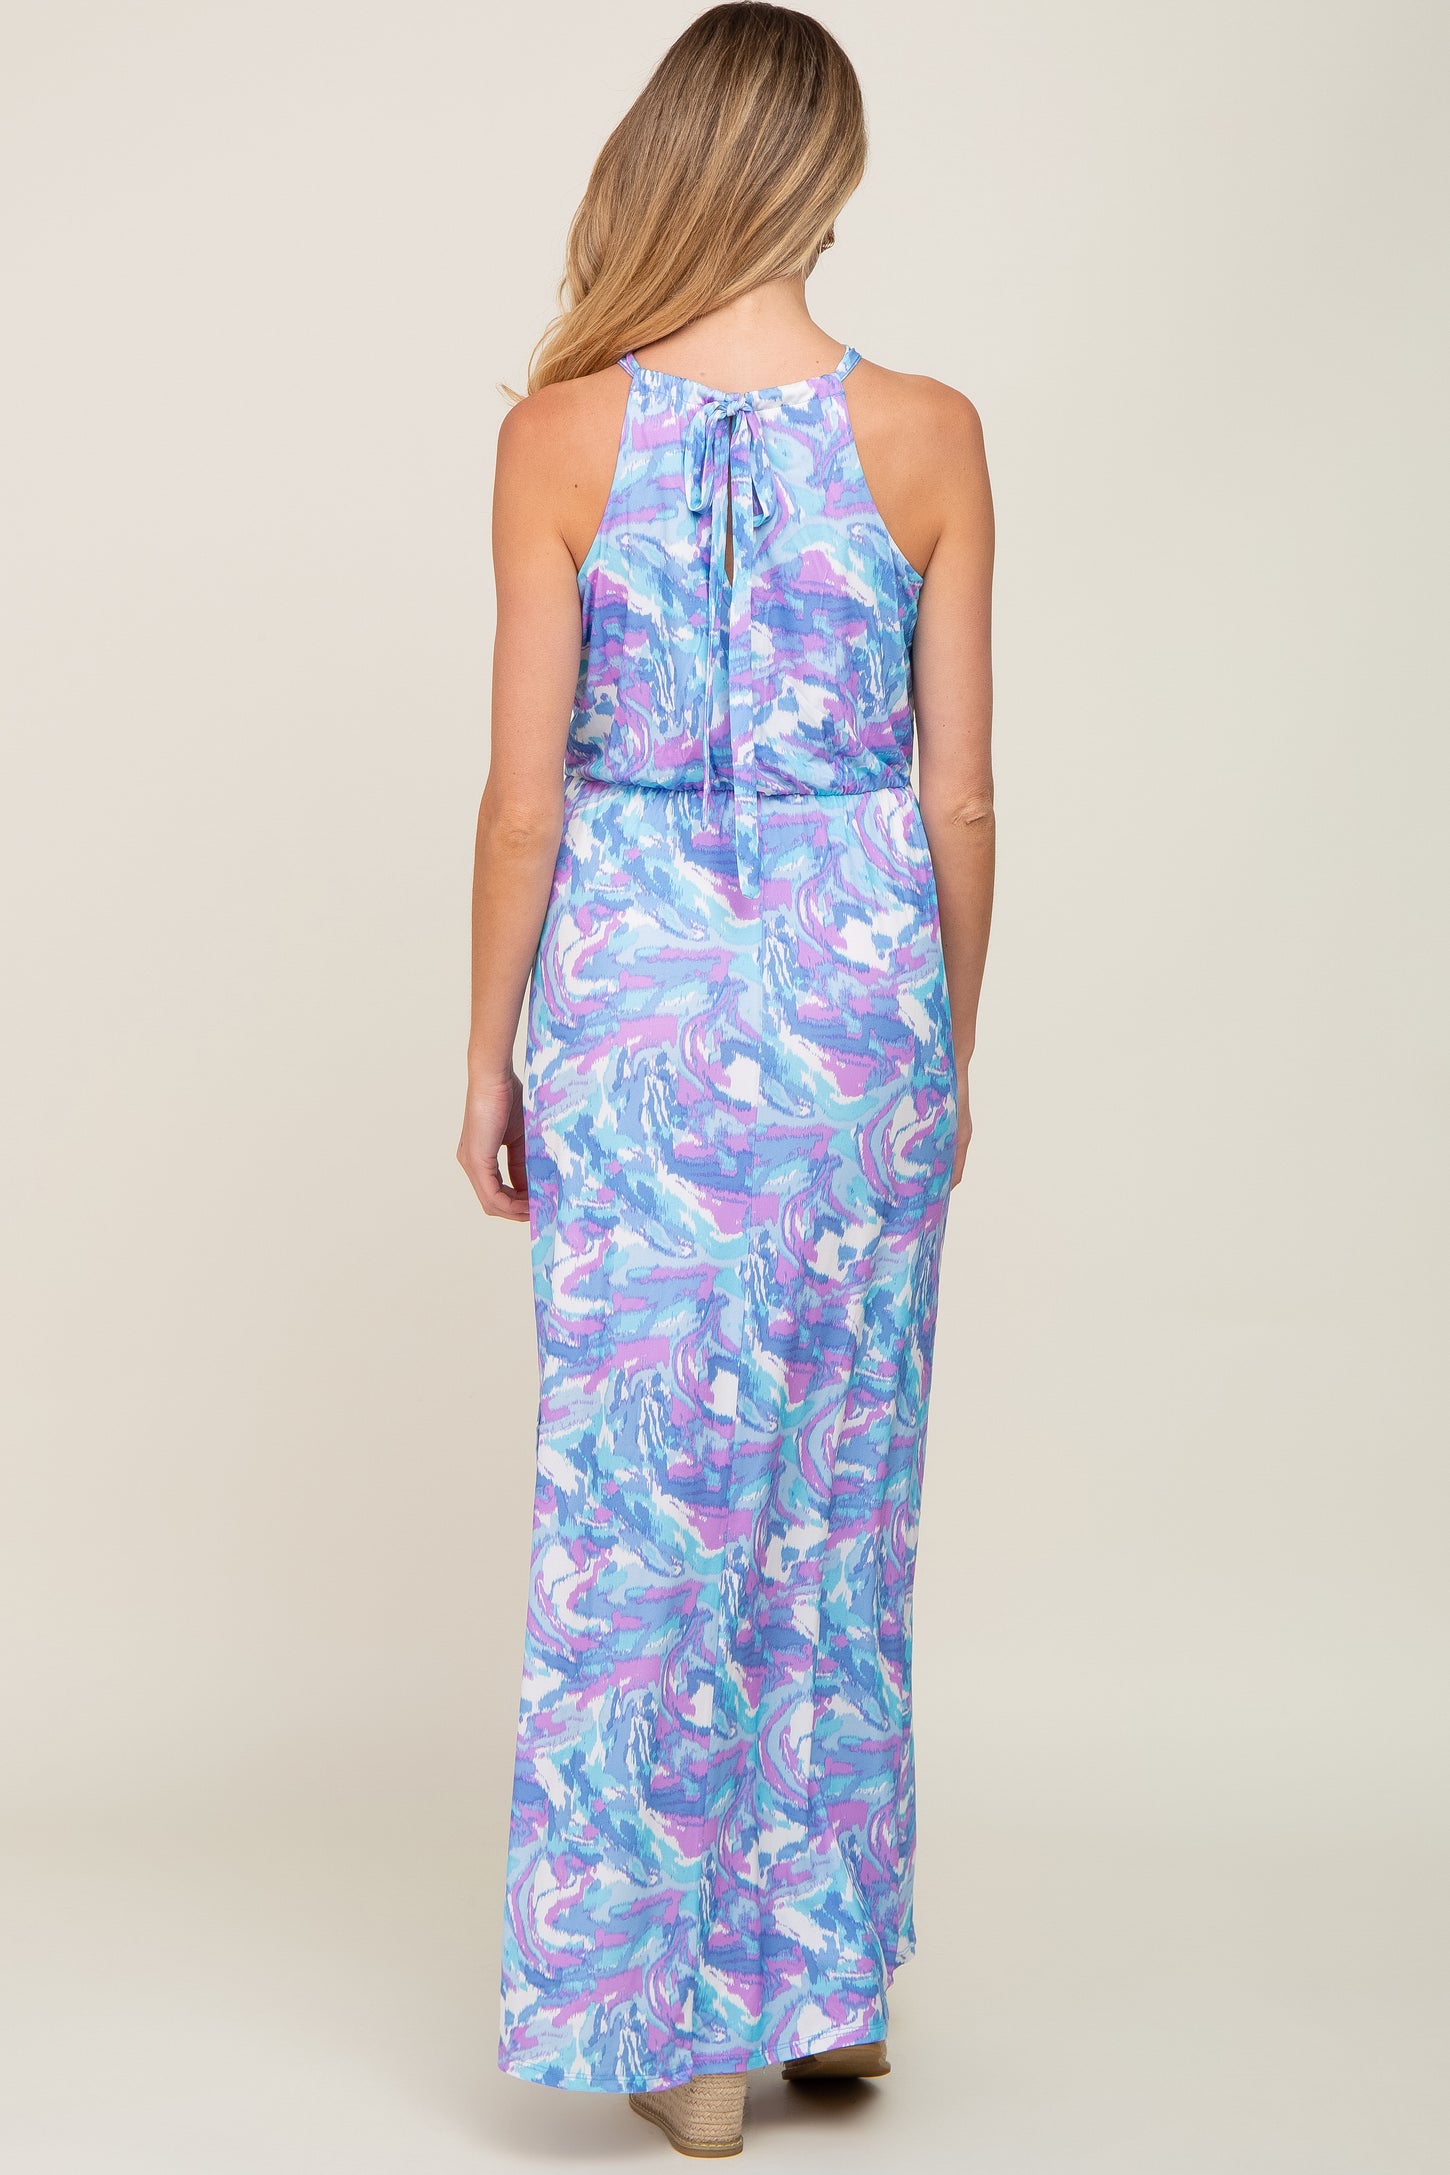 Blue Floral Halter Side Slit Maternity Maxi Dress– PinkBlush